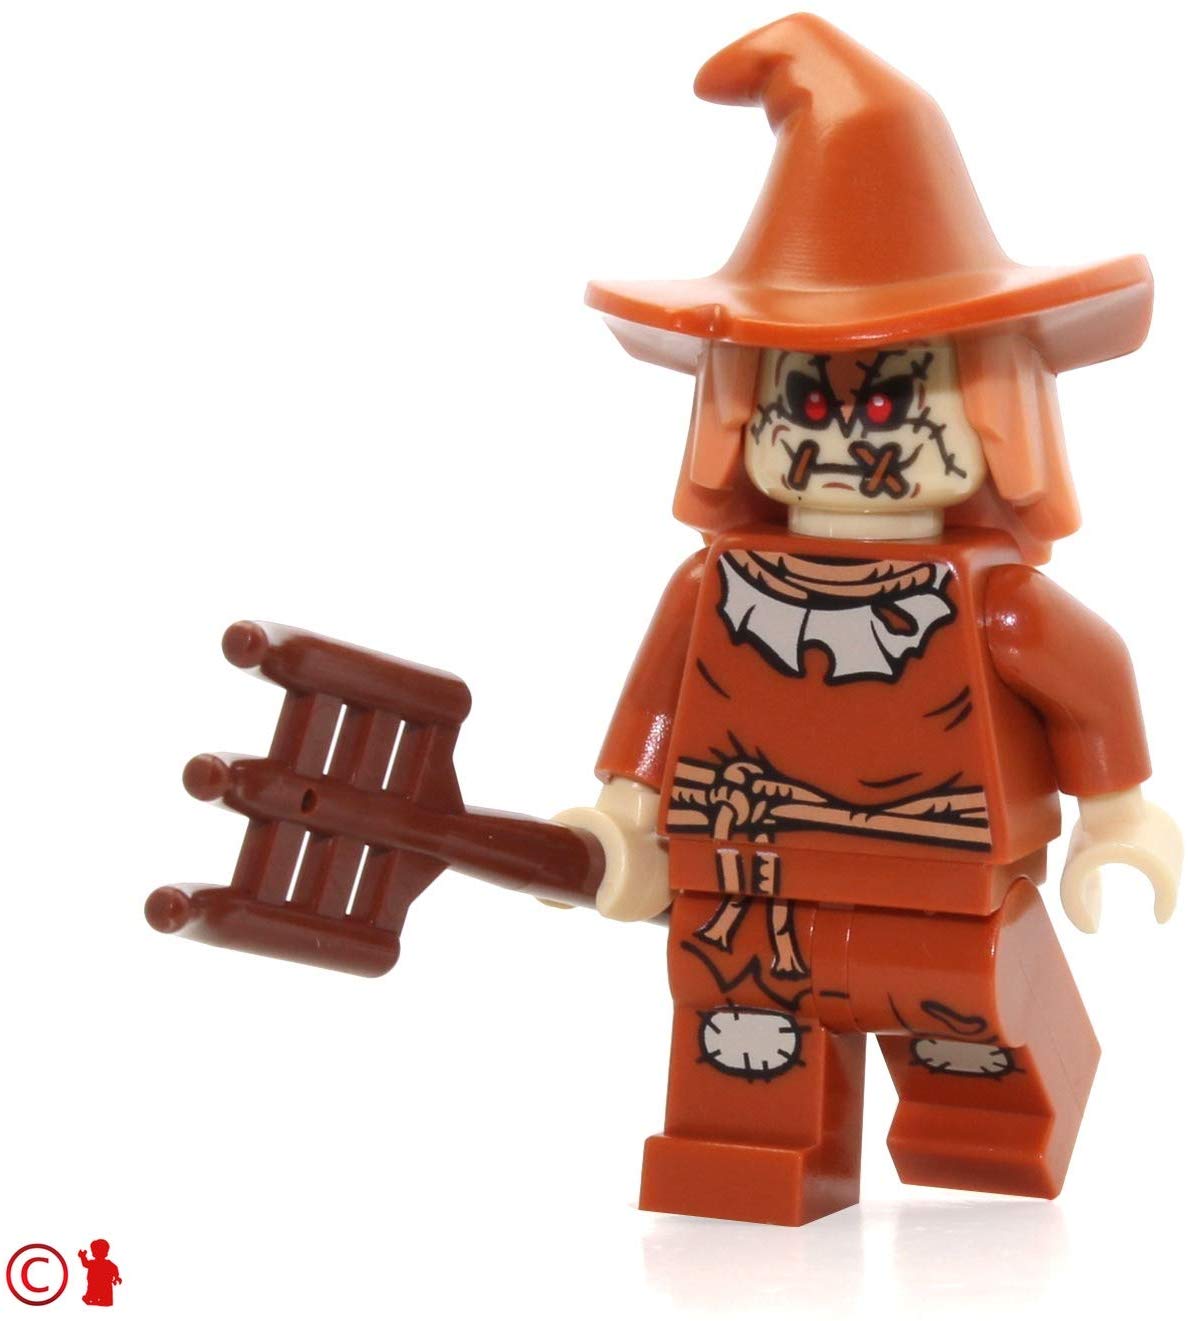 Lego Dc Super Heroes: Scarecrow Minif Igure Mini Fig 76054 By Lego